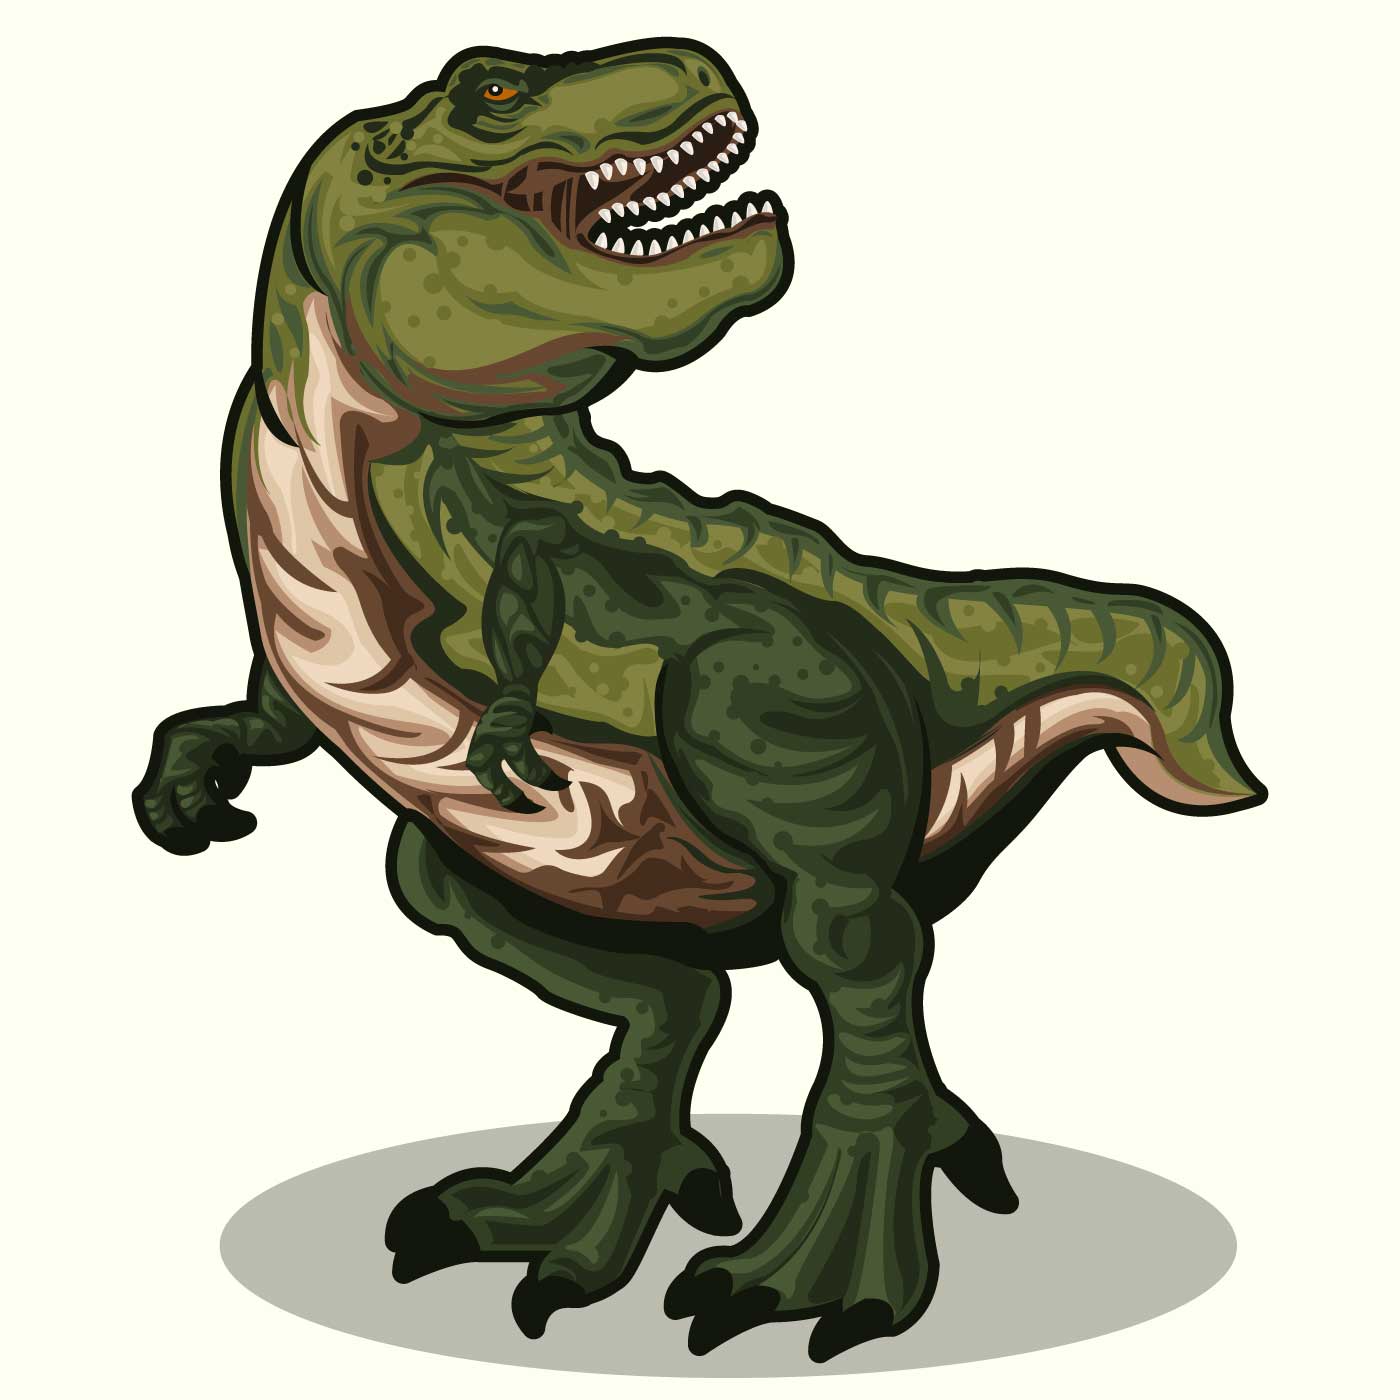 Tiranosaurio Rex Vectores, Iconos, Gráficos y Fondos para Descargar Gratis